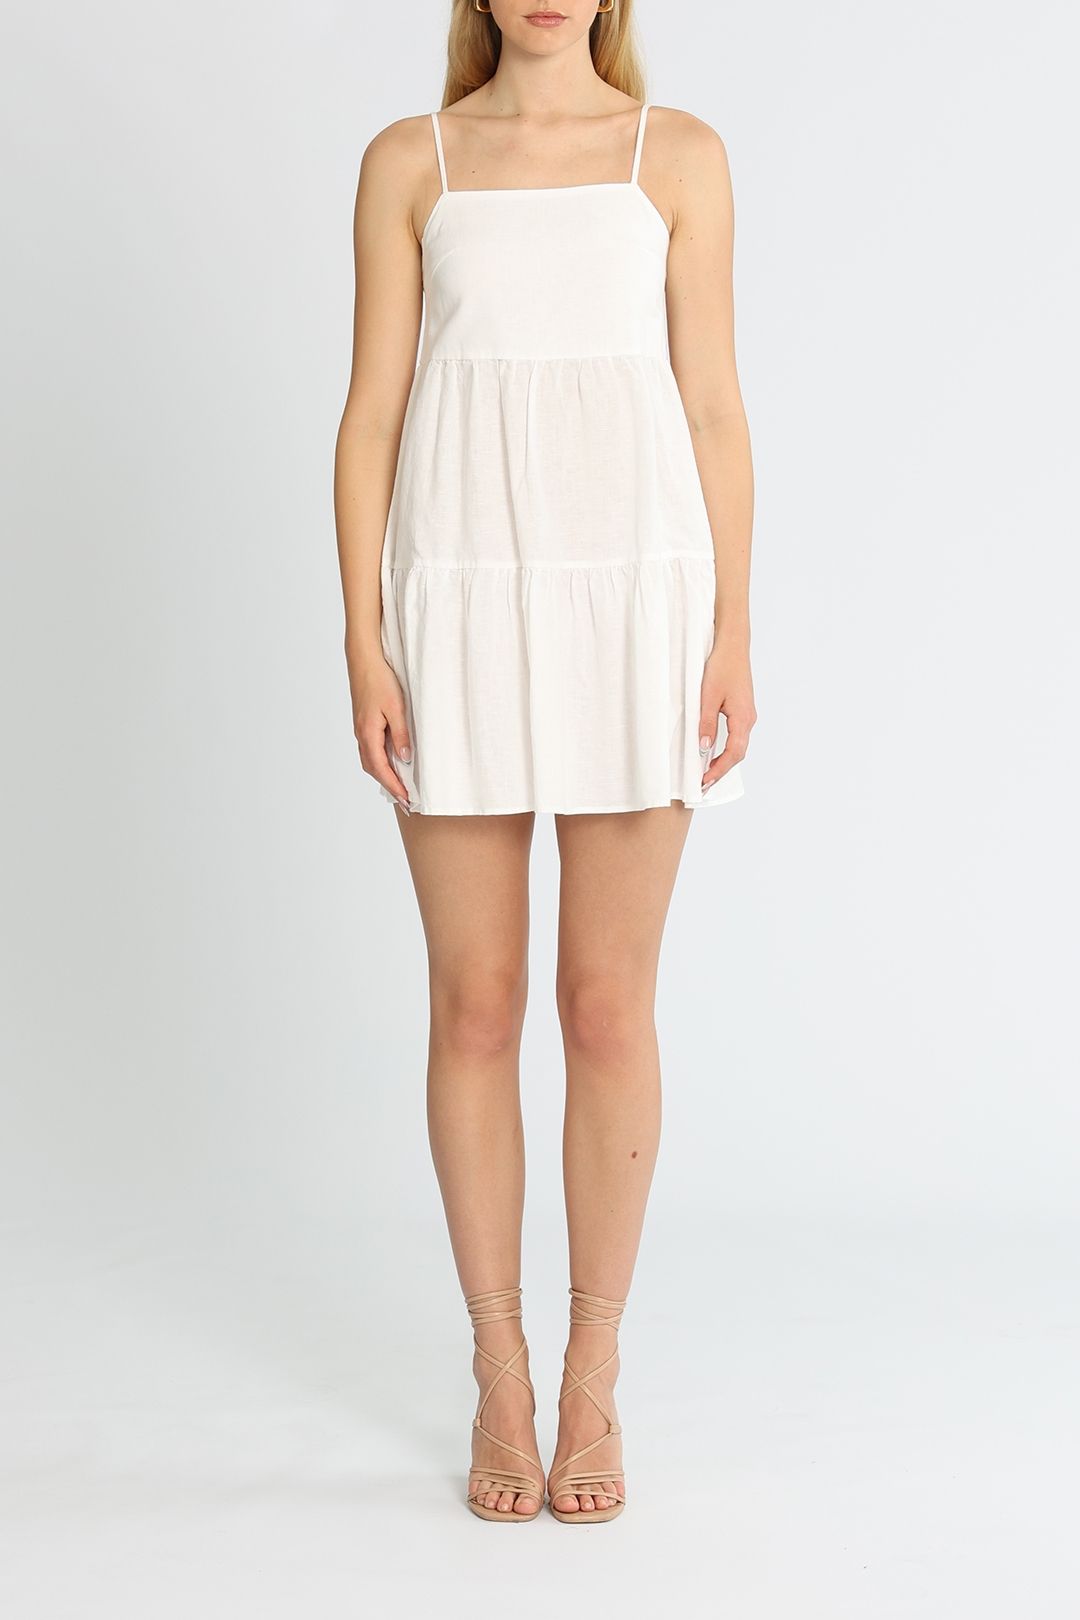 Nude Lucy Jones Linen Mini Dress White